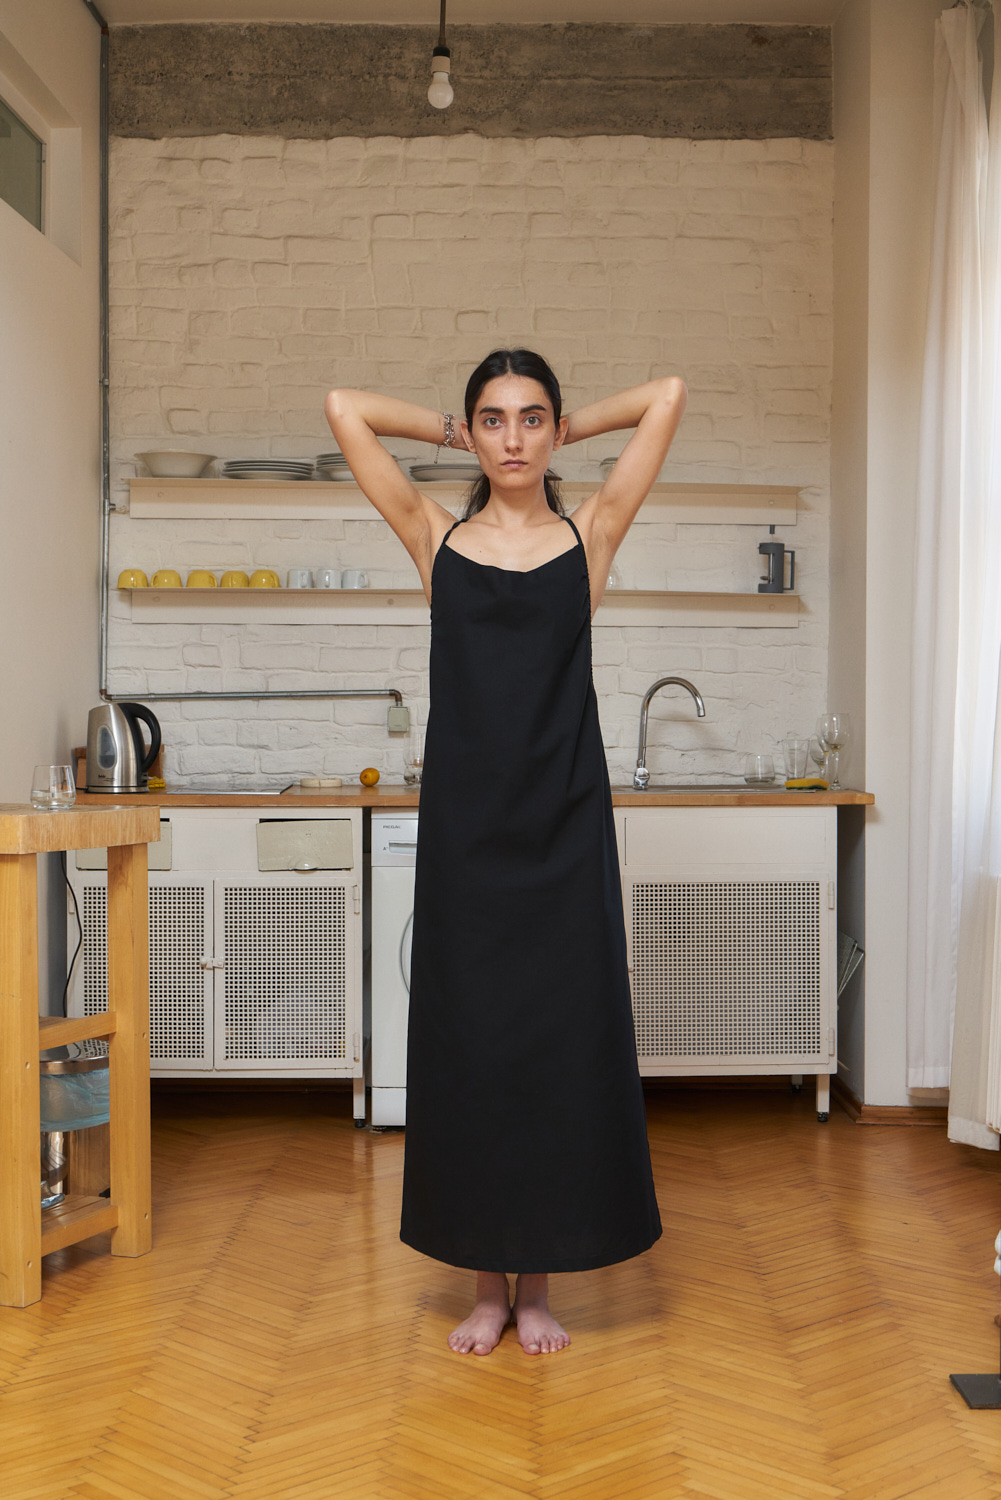 eba halter dress black, organic cotton poplin dress. Mid-calf length and adjustable straps.